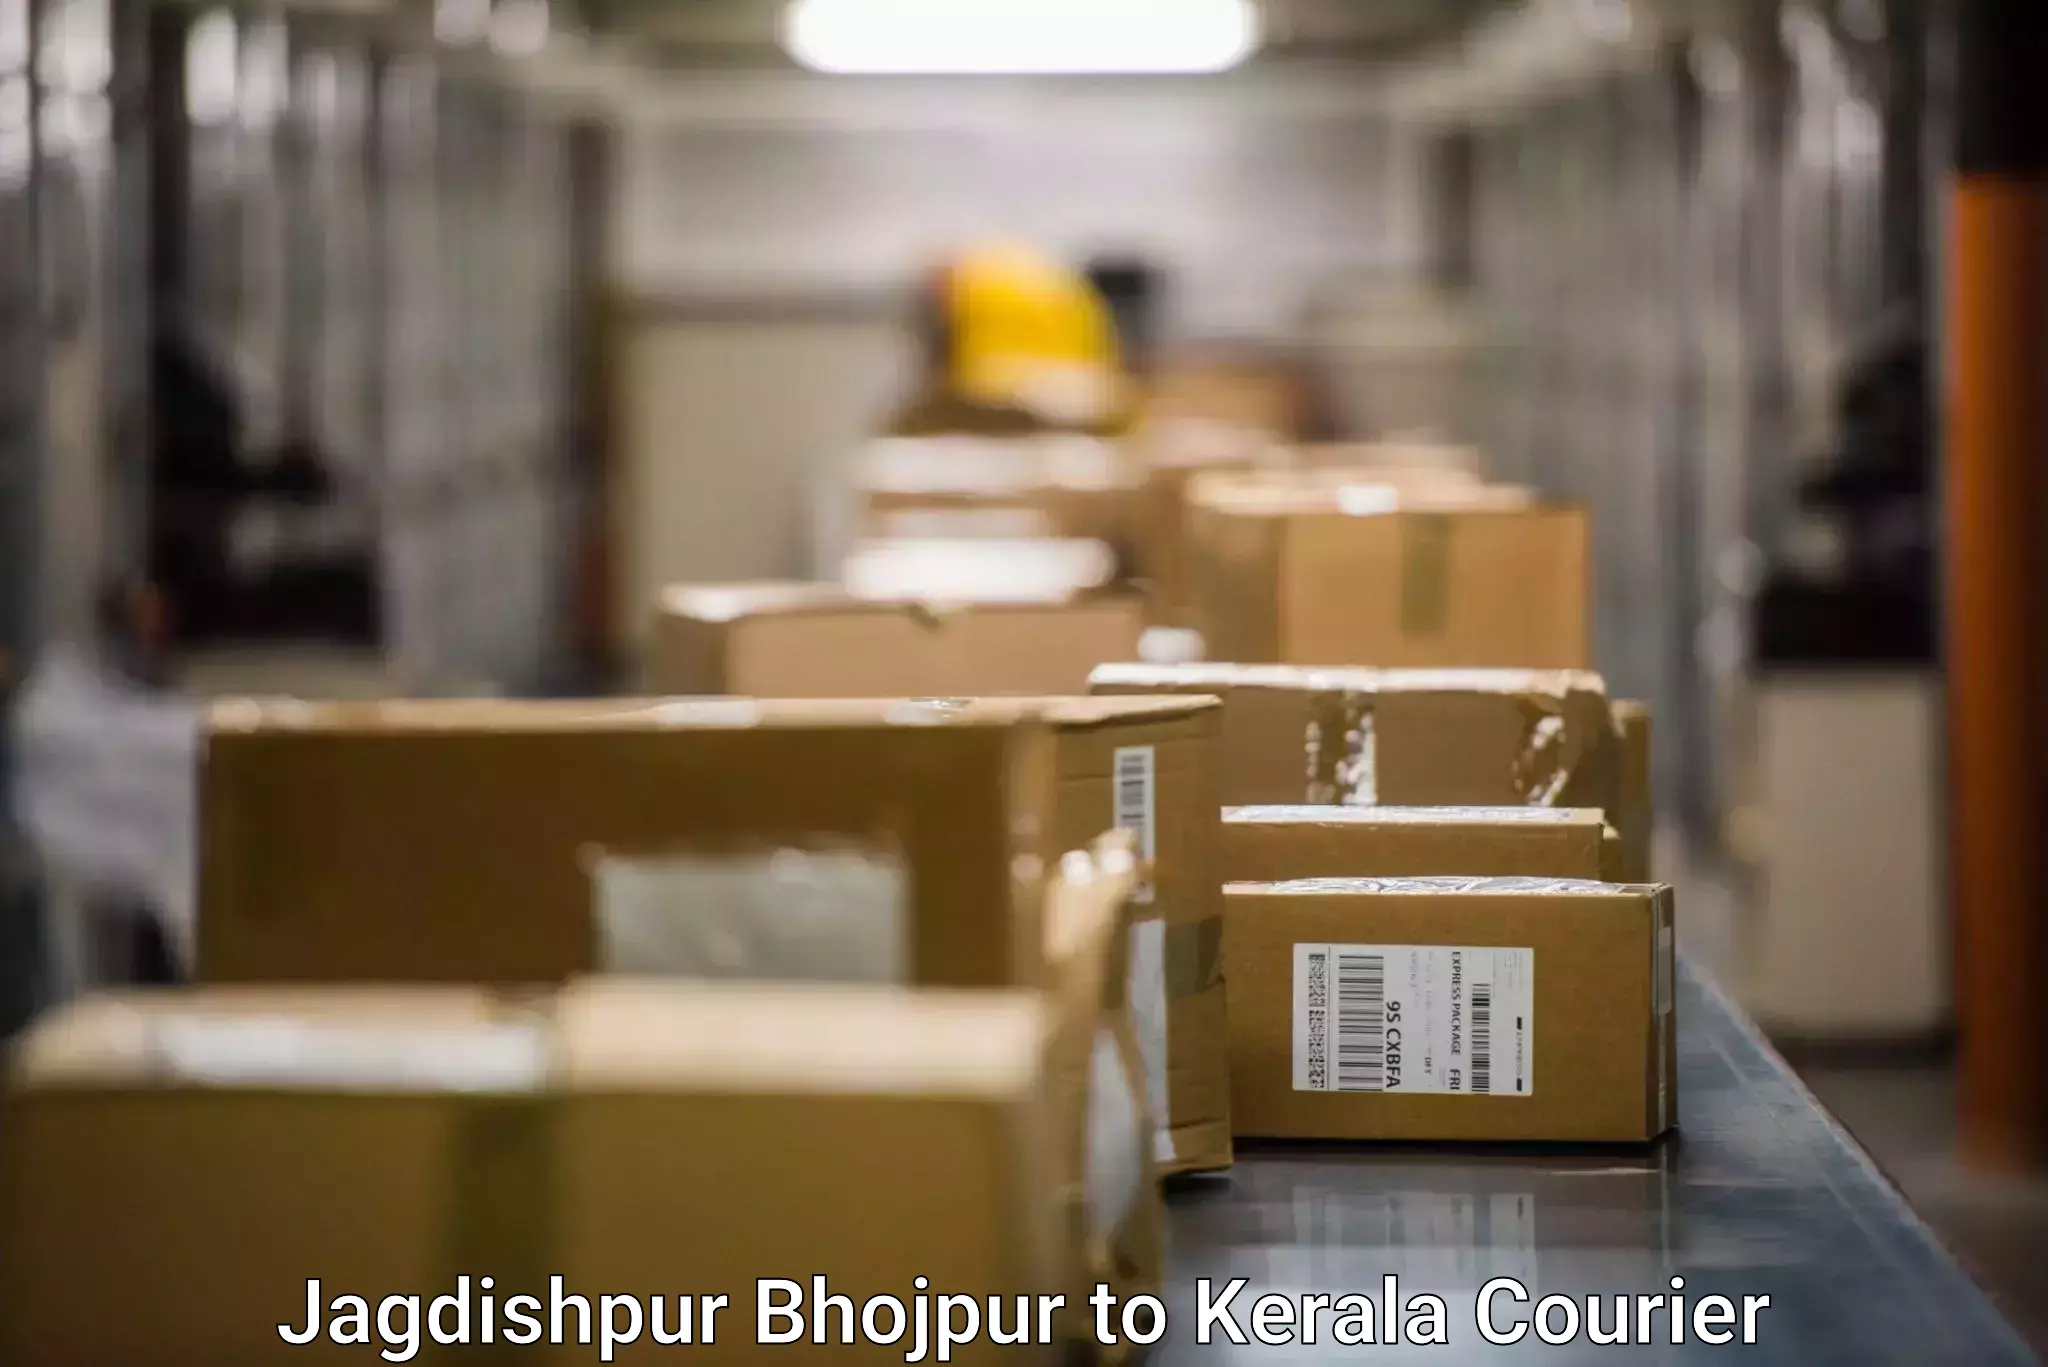 Digital courier platforms Jagdishpur Bhojpur to Ponekkara